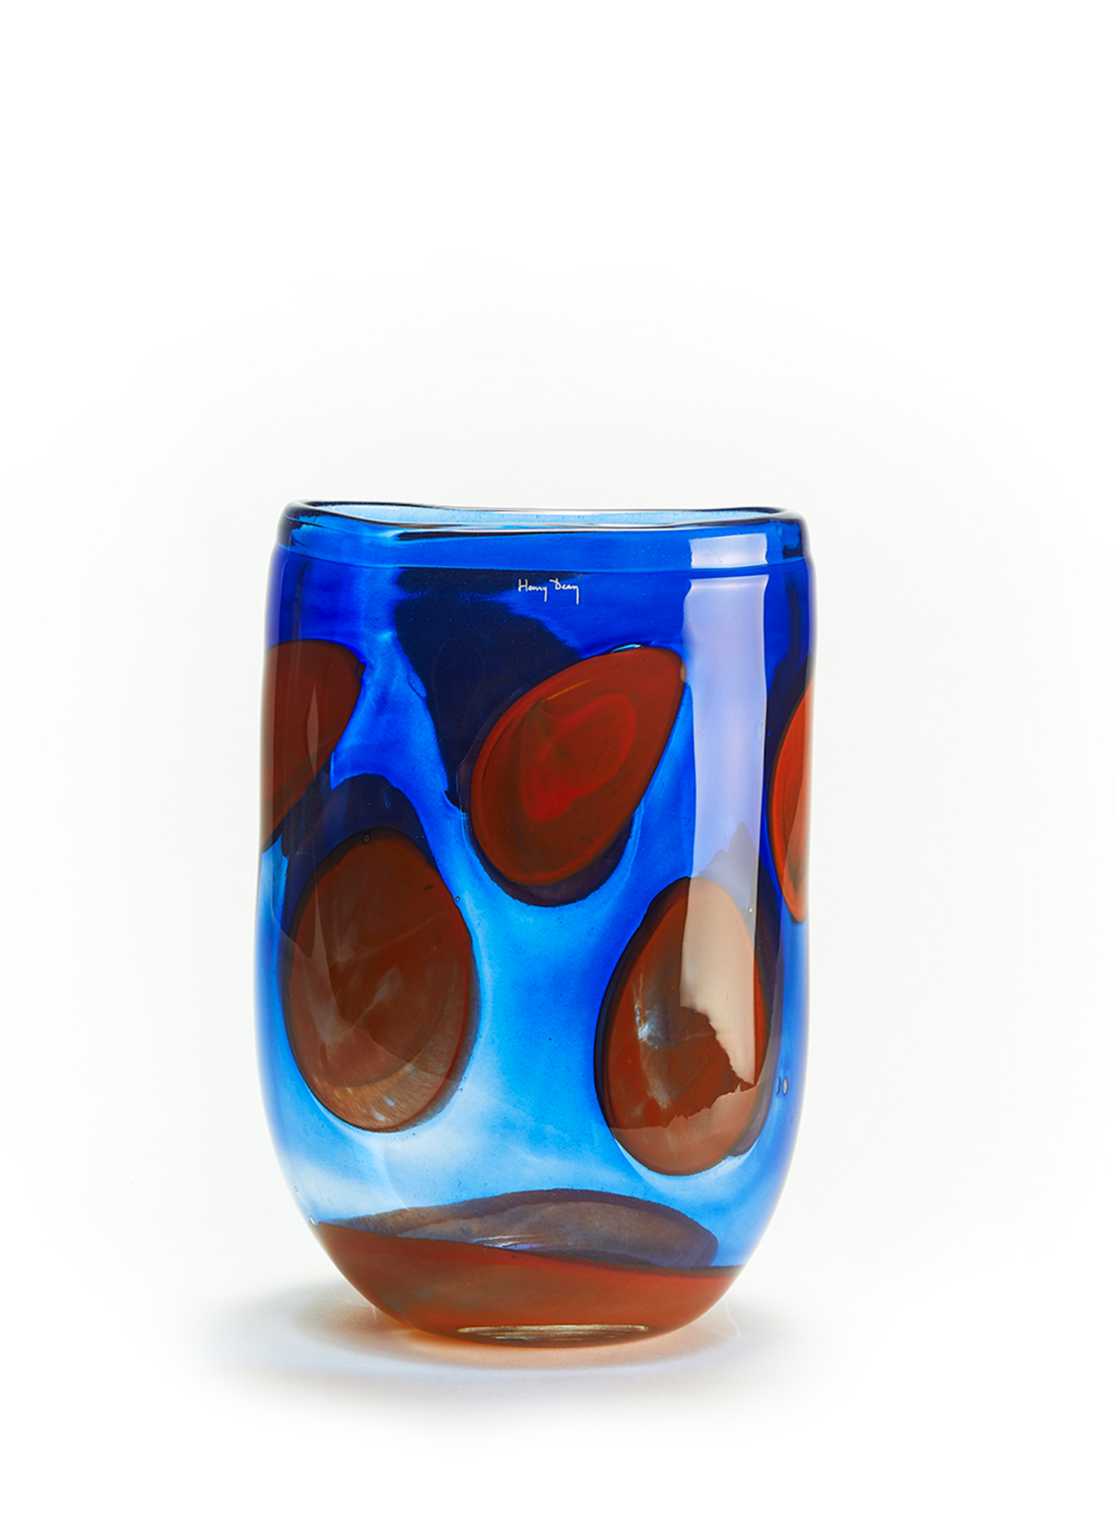 Tall handmade dark blue glass vase with orange spots